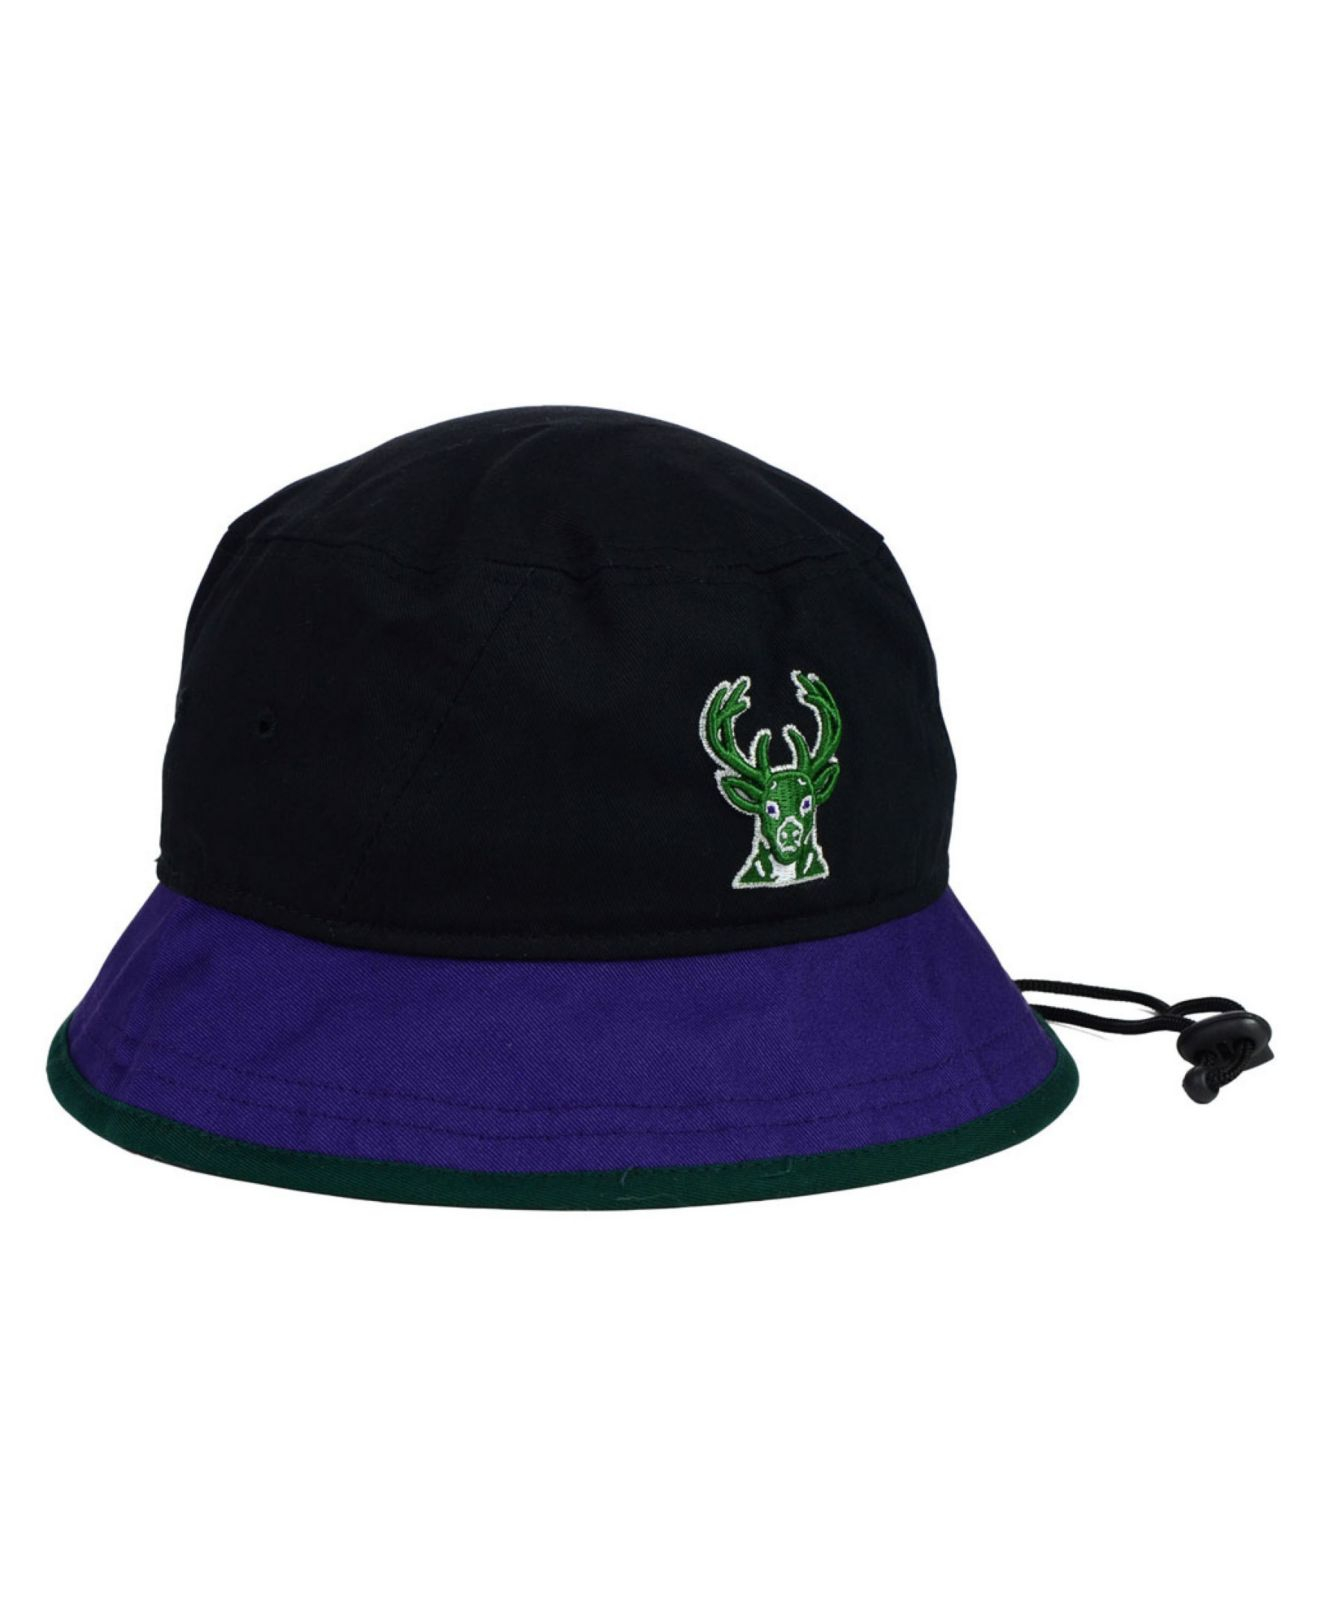 Lyst - Ktz Milwaukee Bucks Black-top Bucket Hat in Black for Men